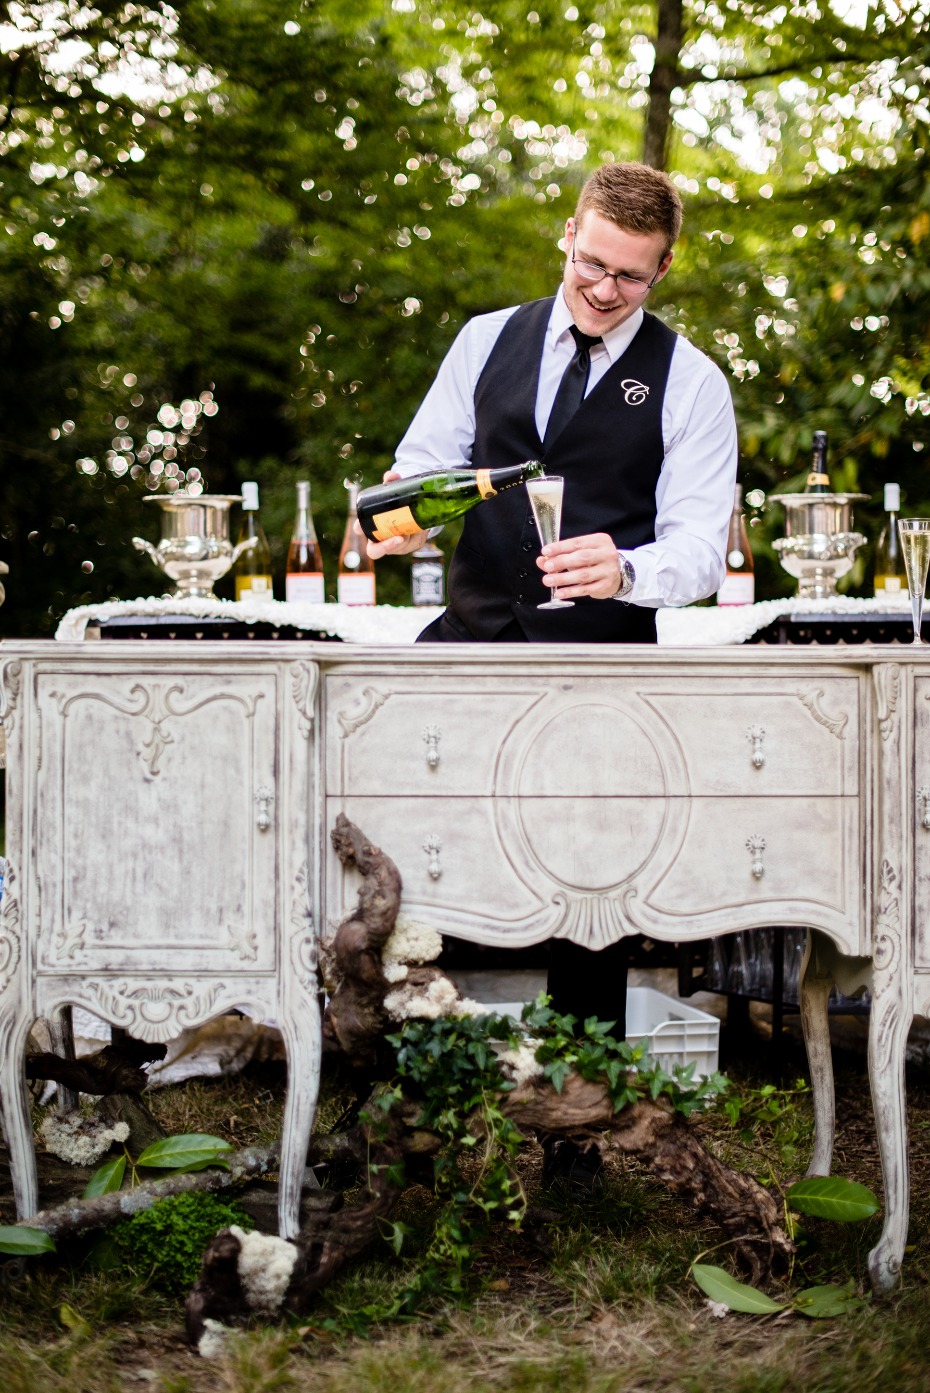 Use vintage furniture as a wedding bar